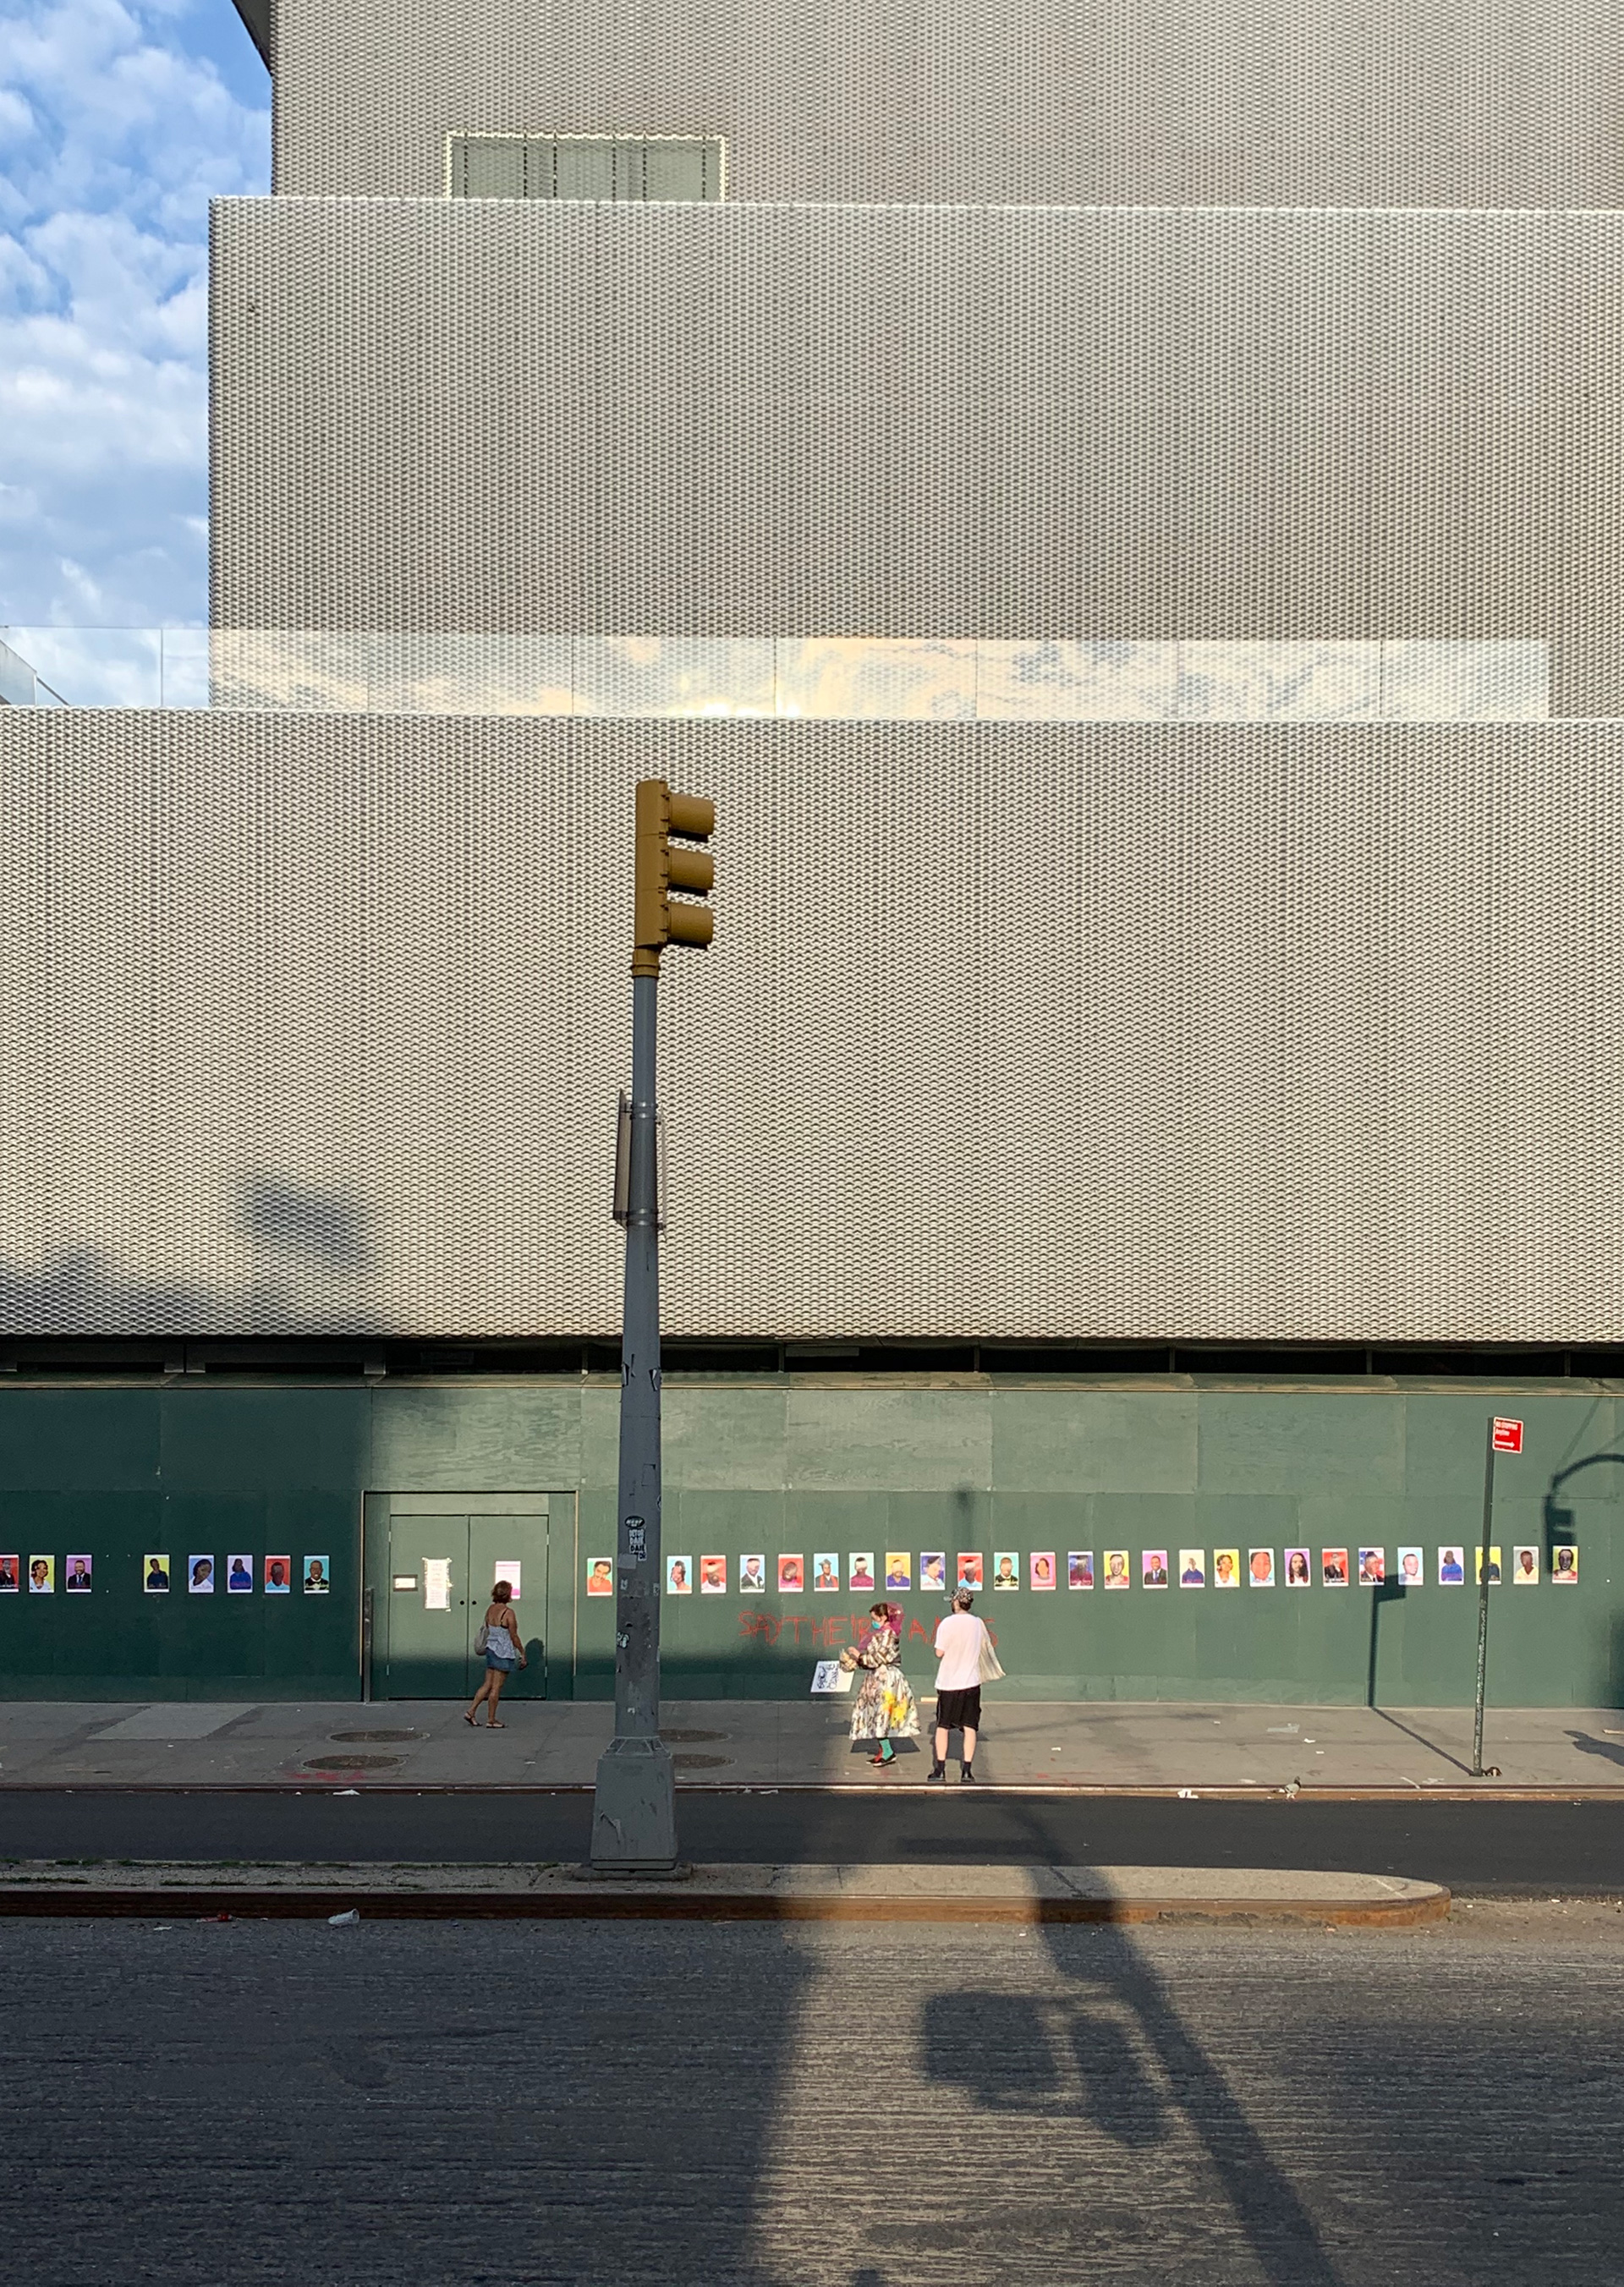 New Museum, Lower East Side, Manhattan, New York City, June 10, 2020. © Lucie Rebeyrol